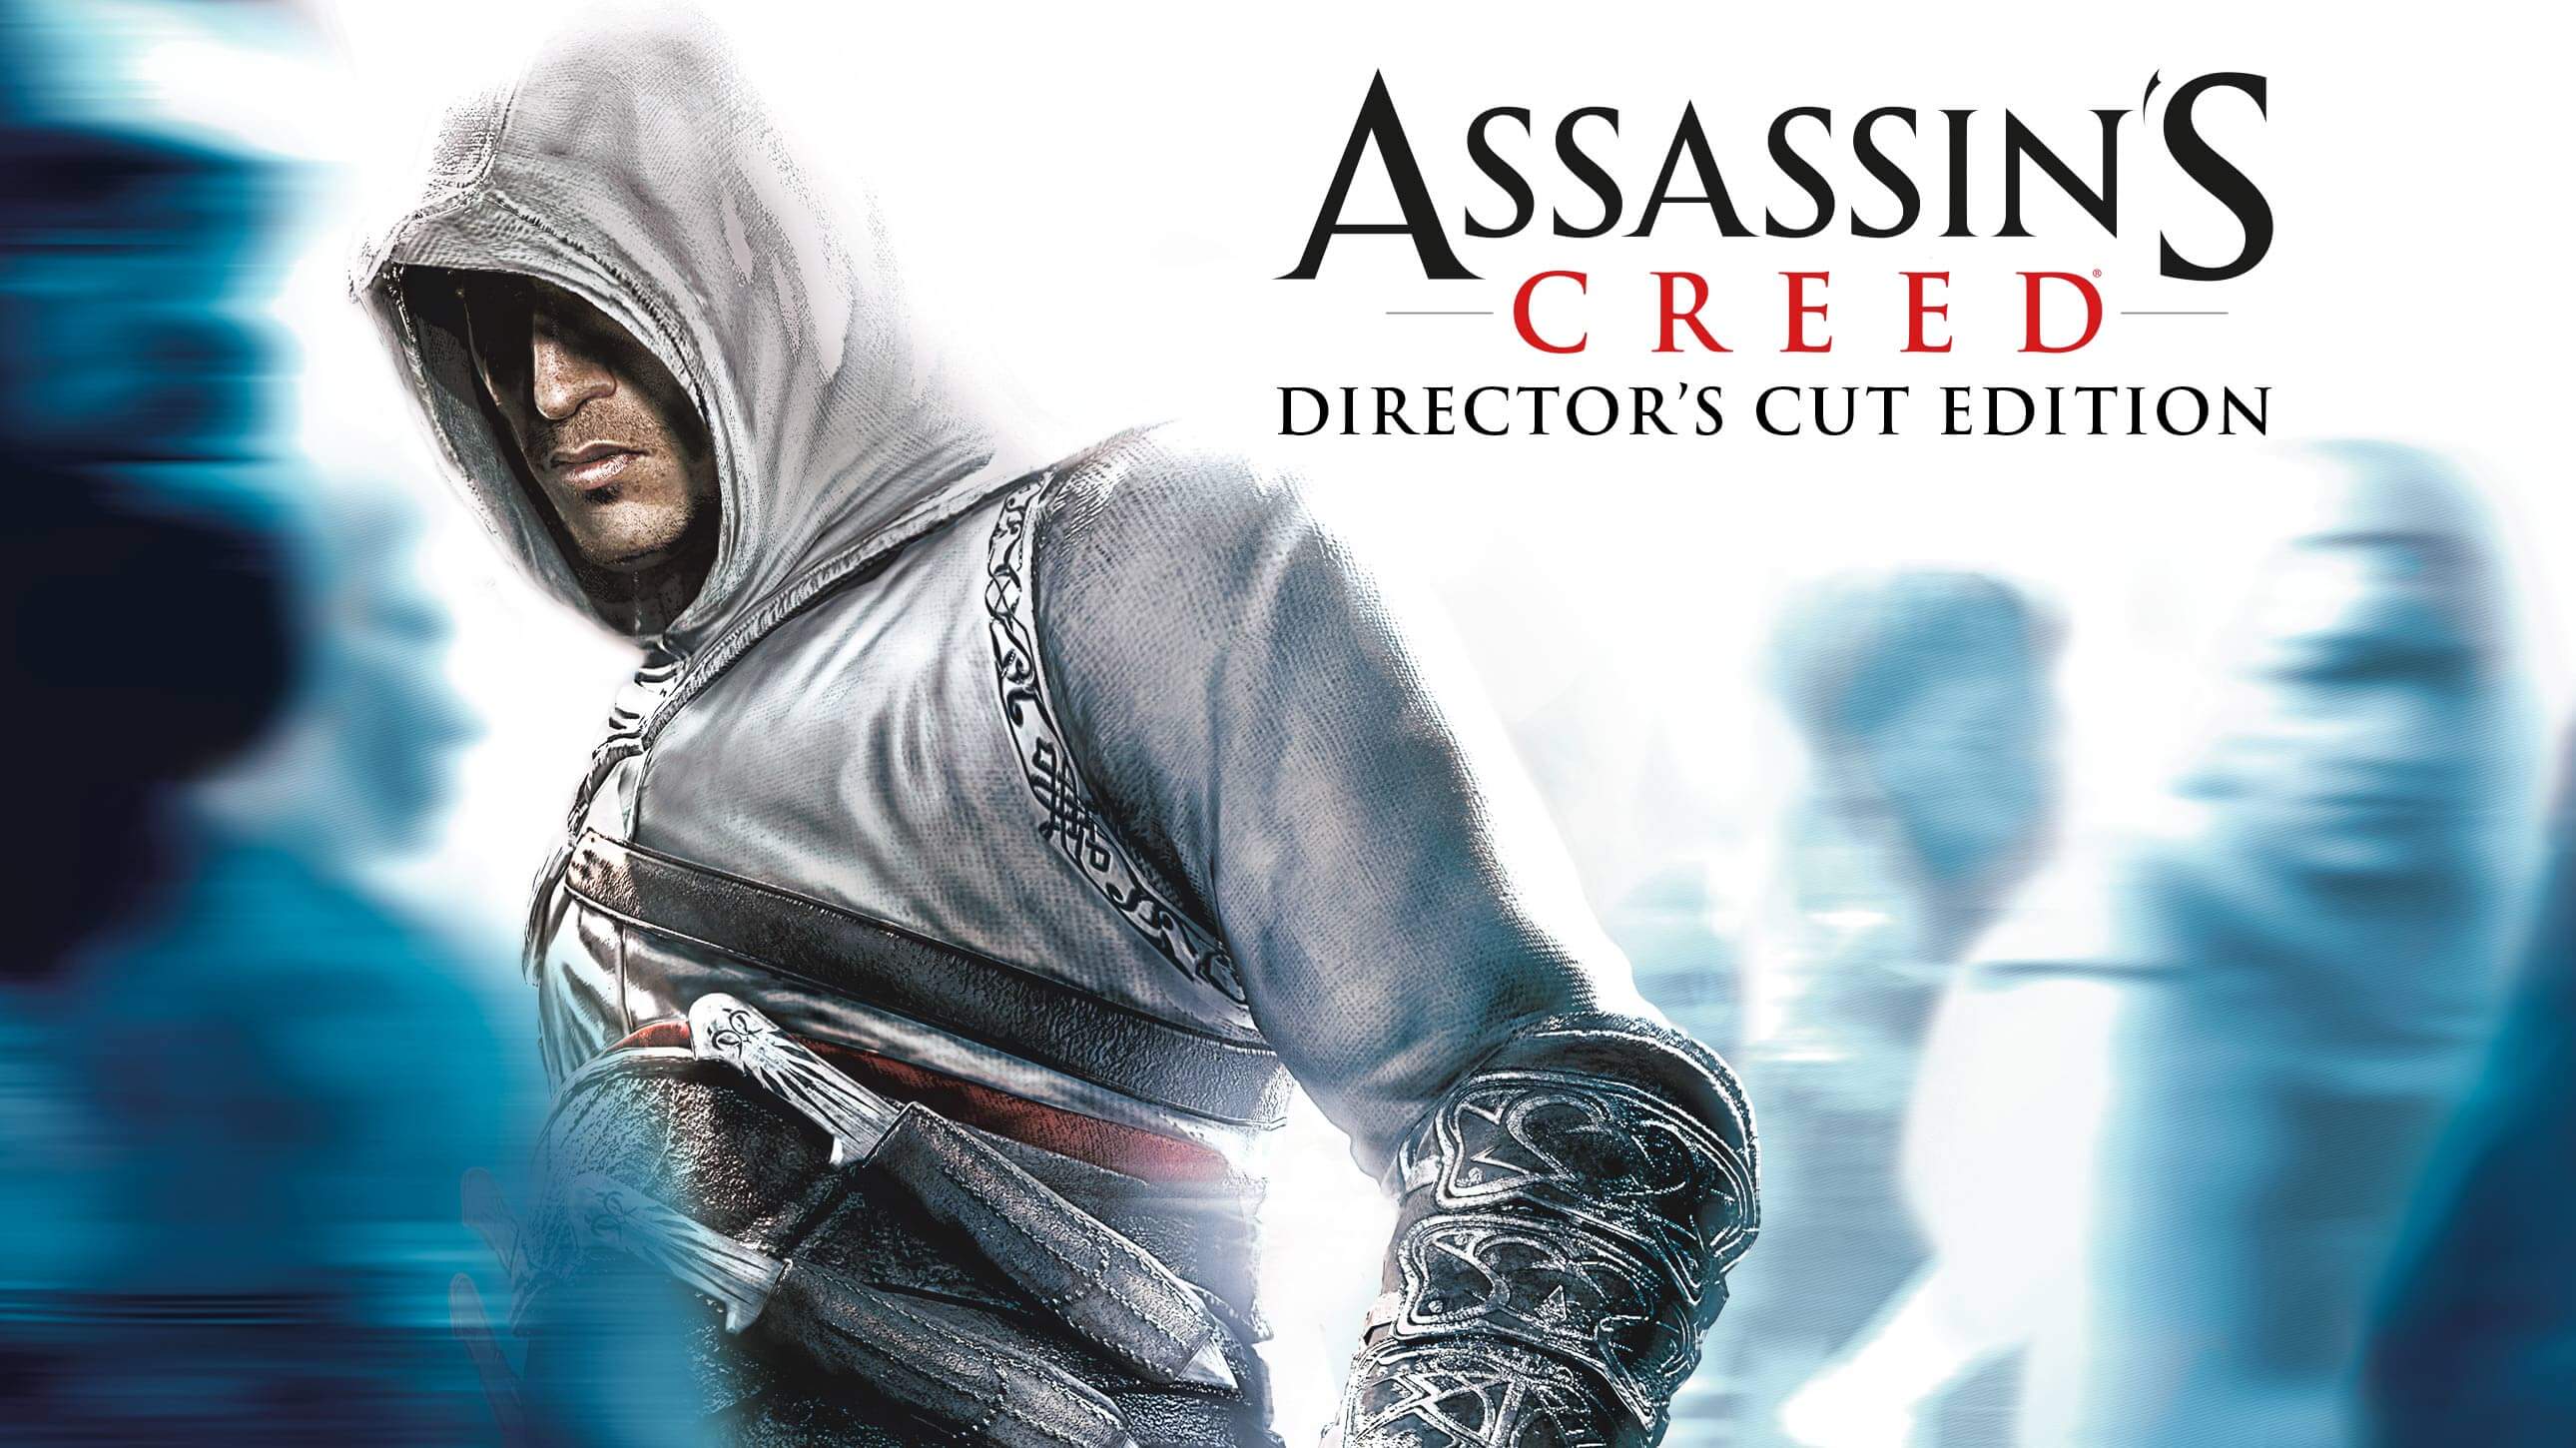 Giới thiệu về Assassins Creed Director’s Cut Edition